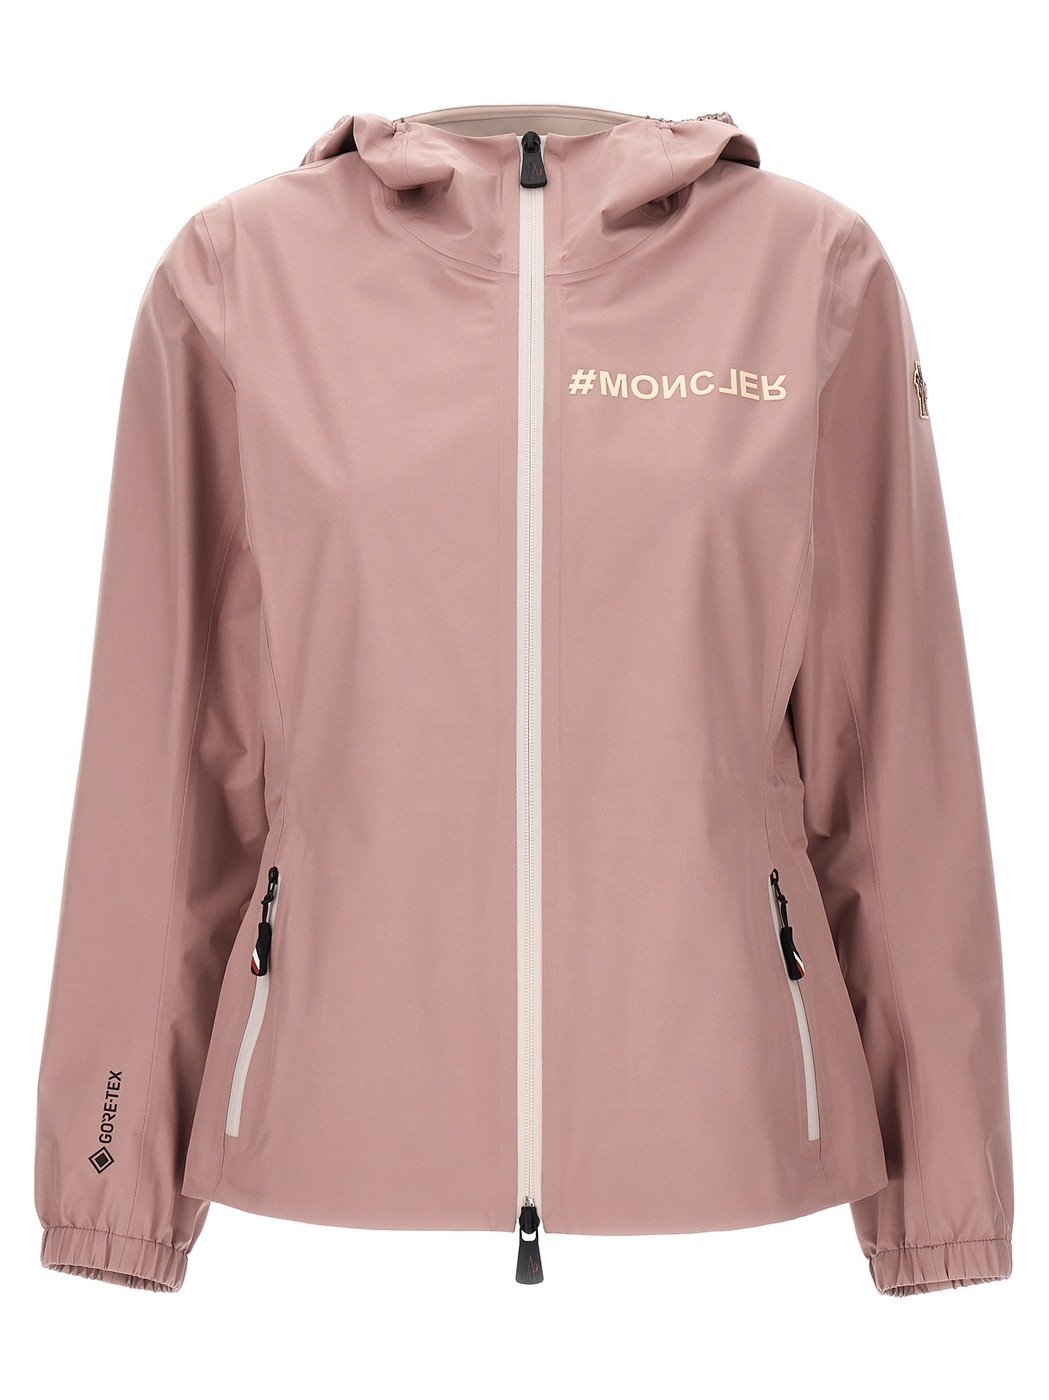 MONCLER GRENOBLE モンクレール グルーノーブス ピンク Pink 'Valles' jacket ジャケット レディース ..